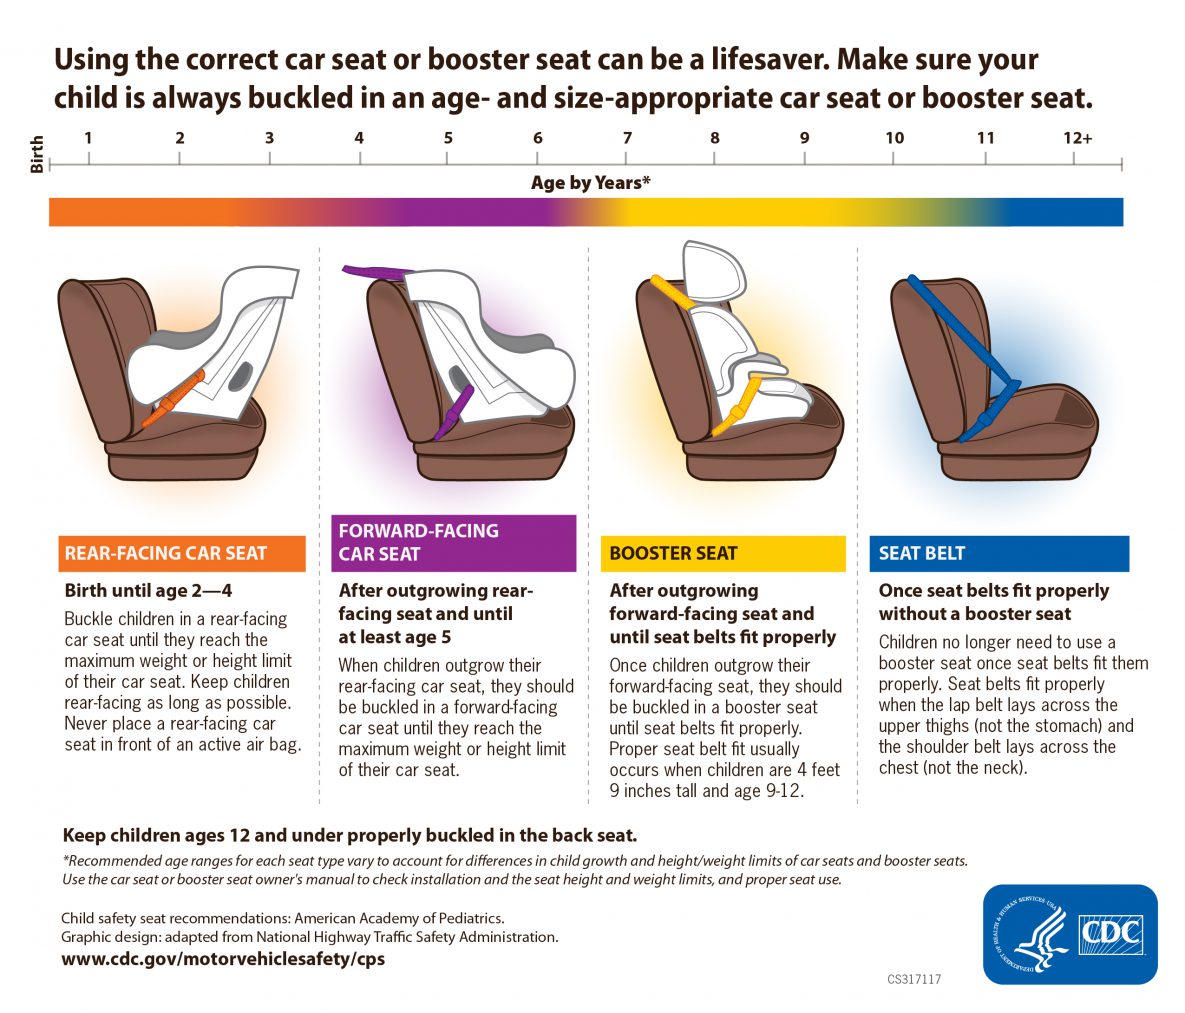 forward facing car seat limits